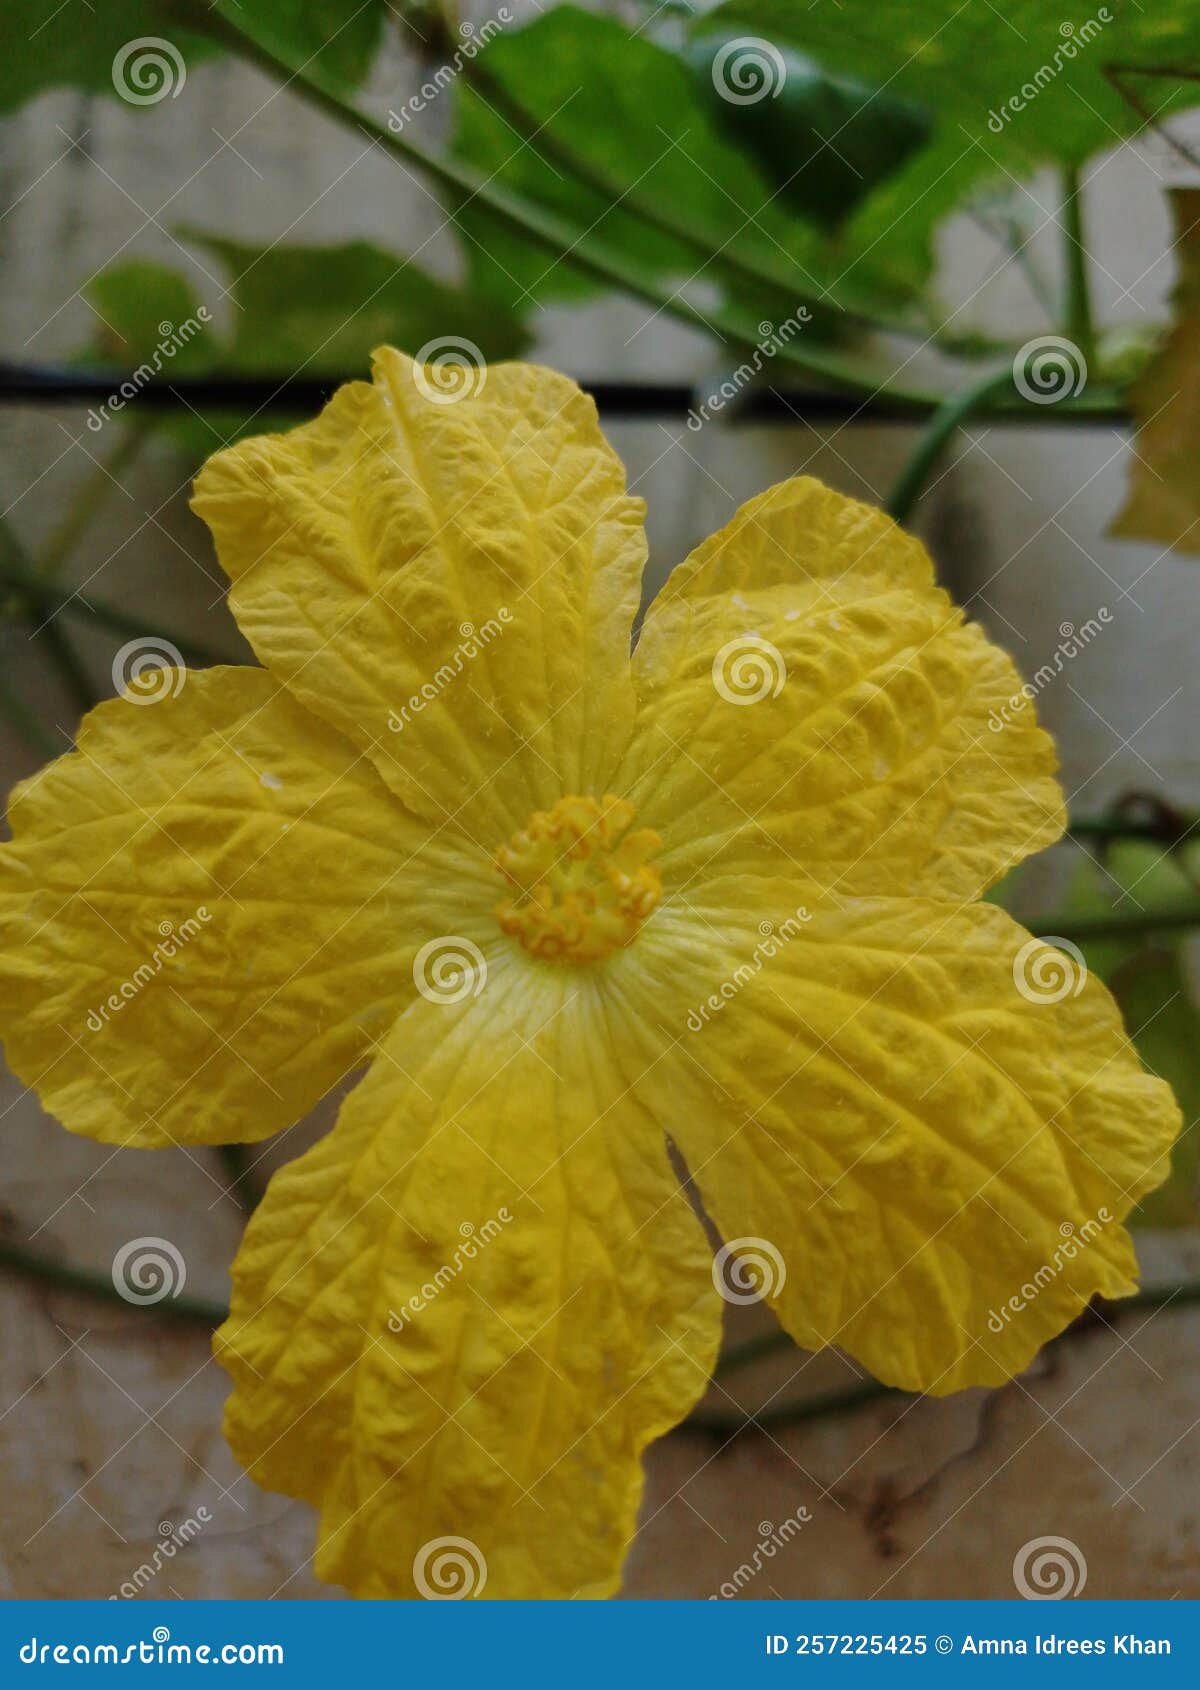 yellow ridged gourd flower